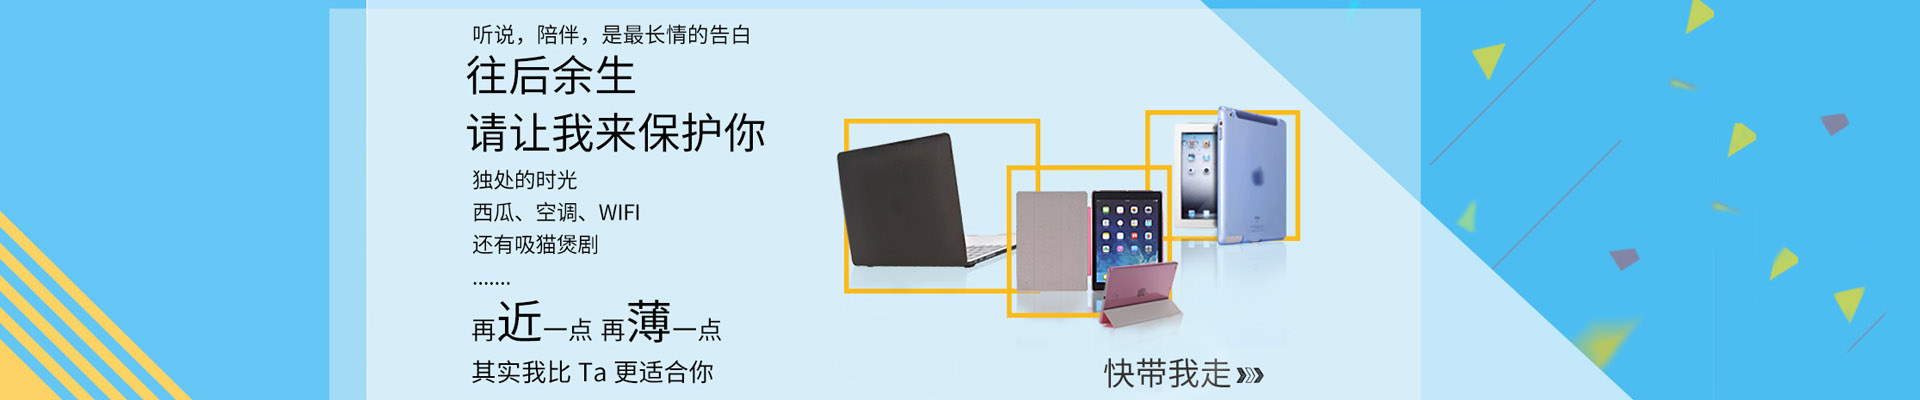 MacBook笔记本保护壳-MacBook PC保护壳-东莞市成康电子有限公司